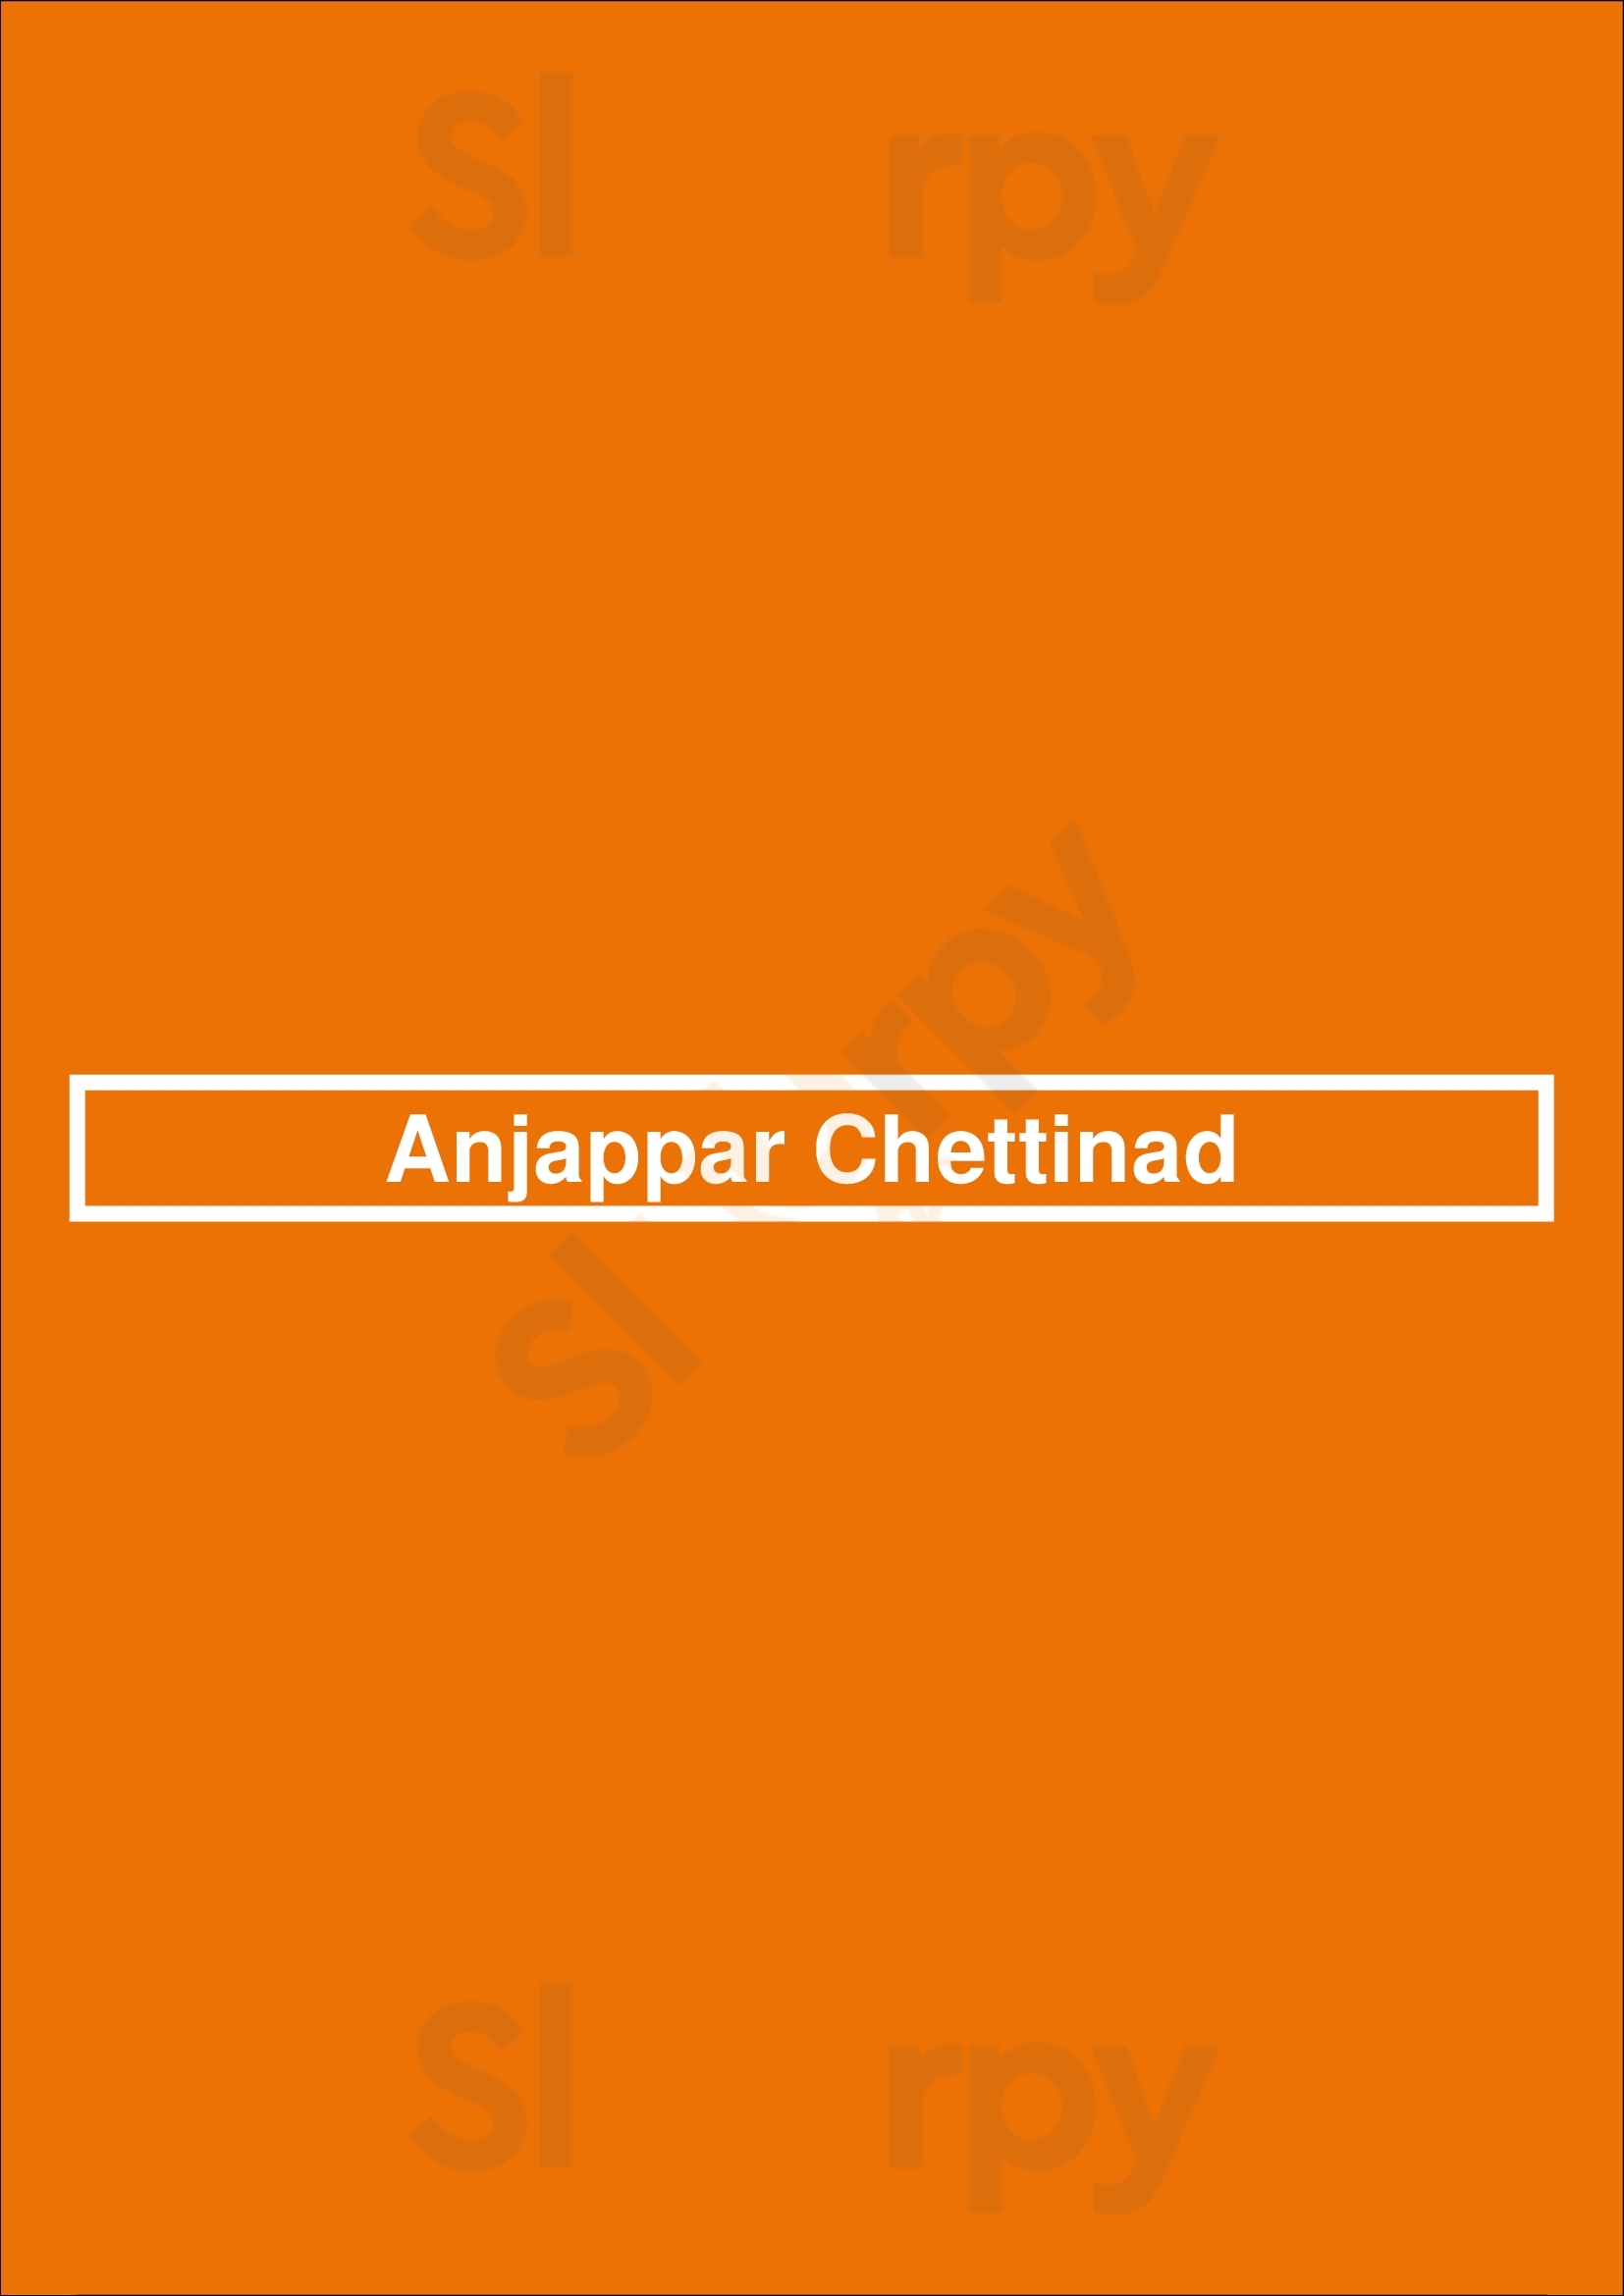 Anjappar Chettinad Mississauga Menu - 1